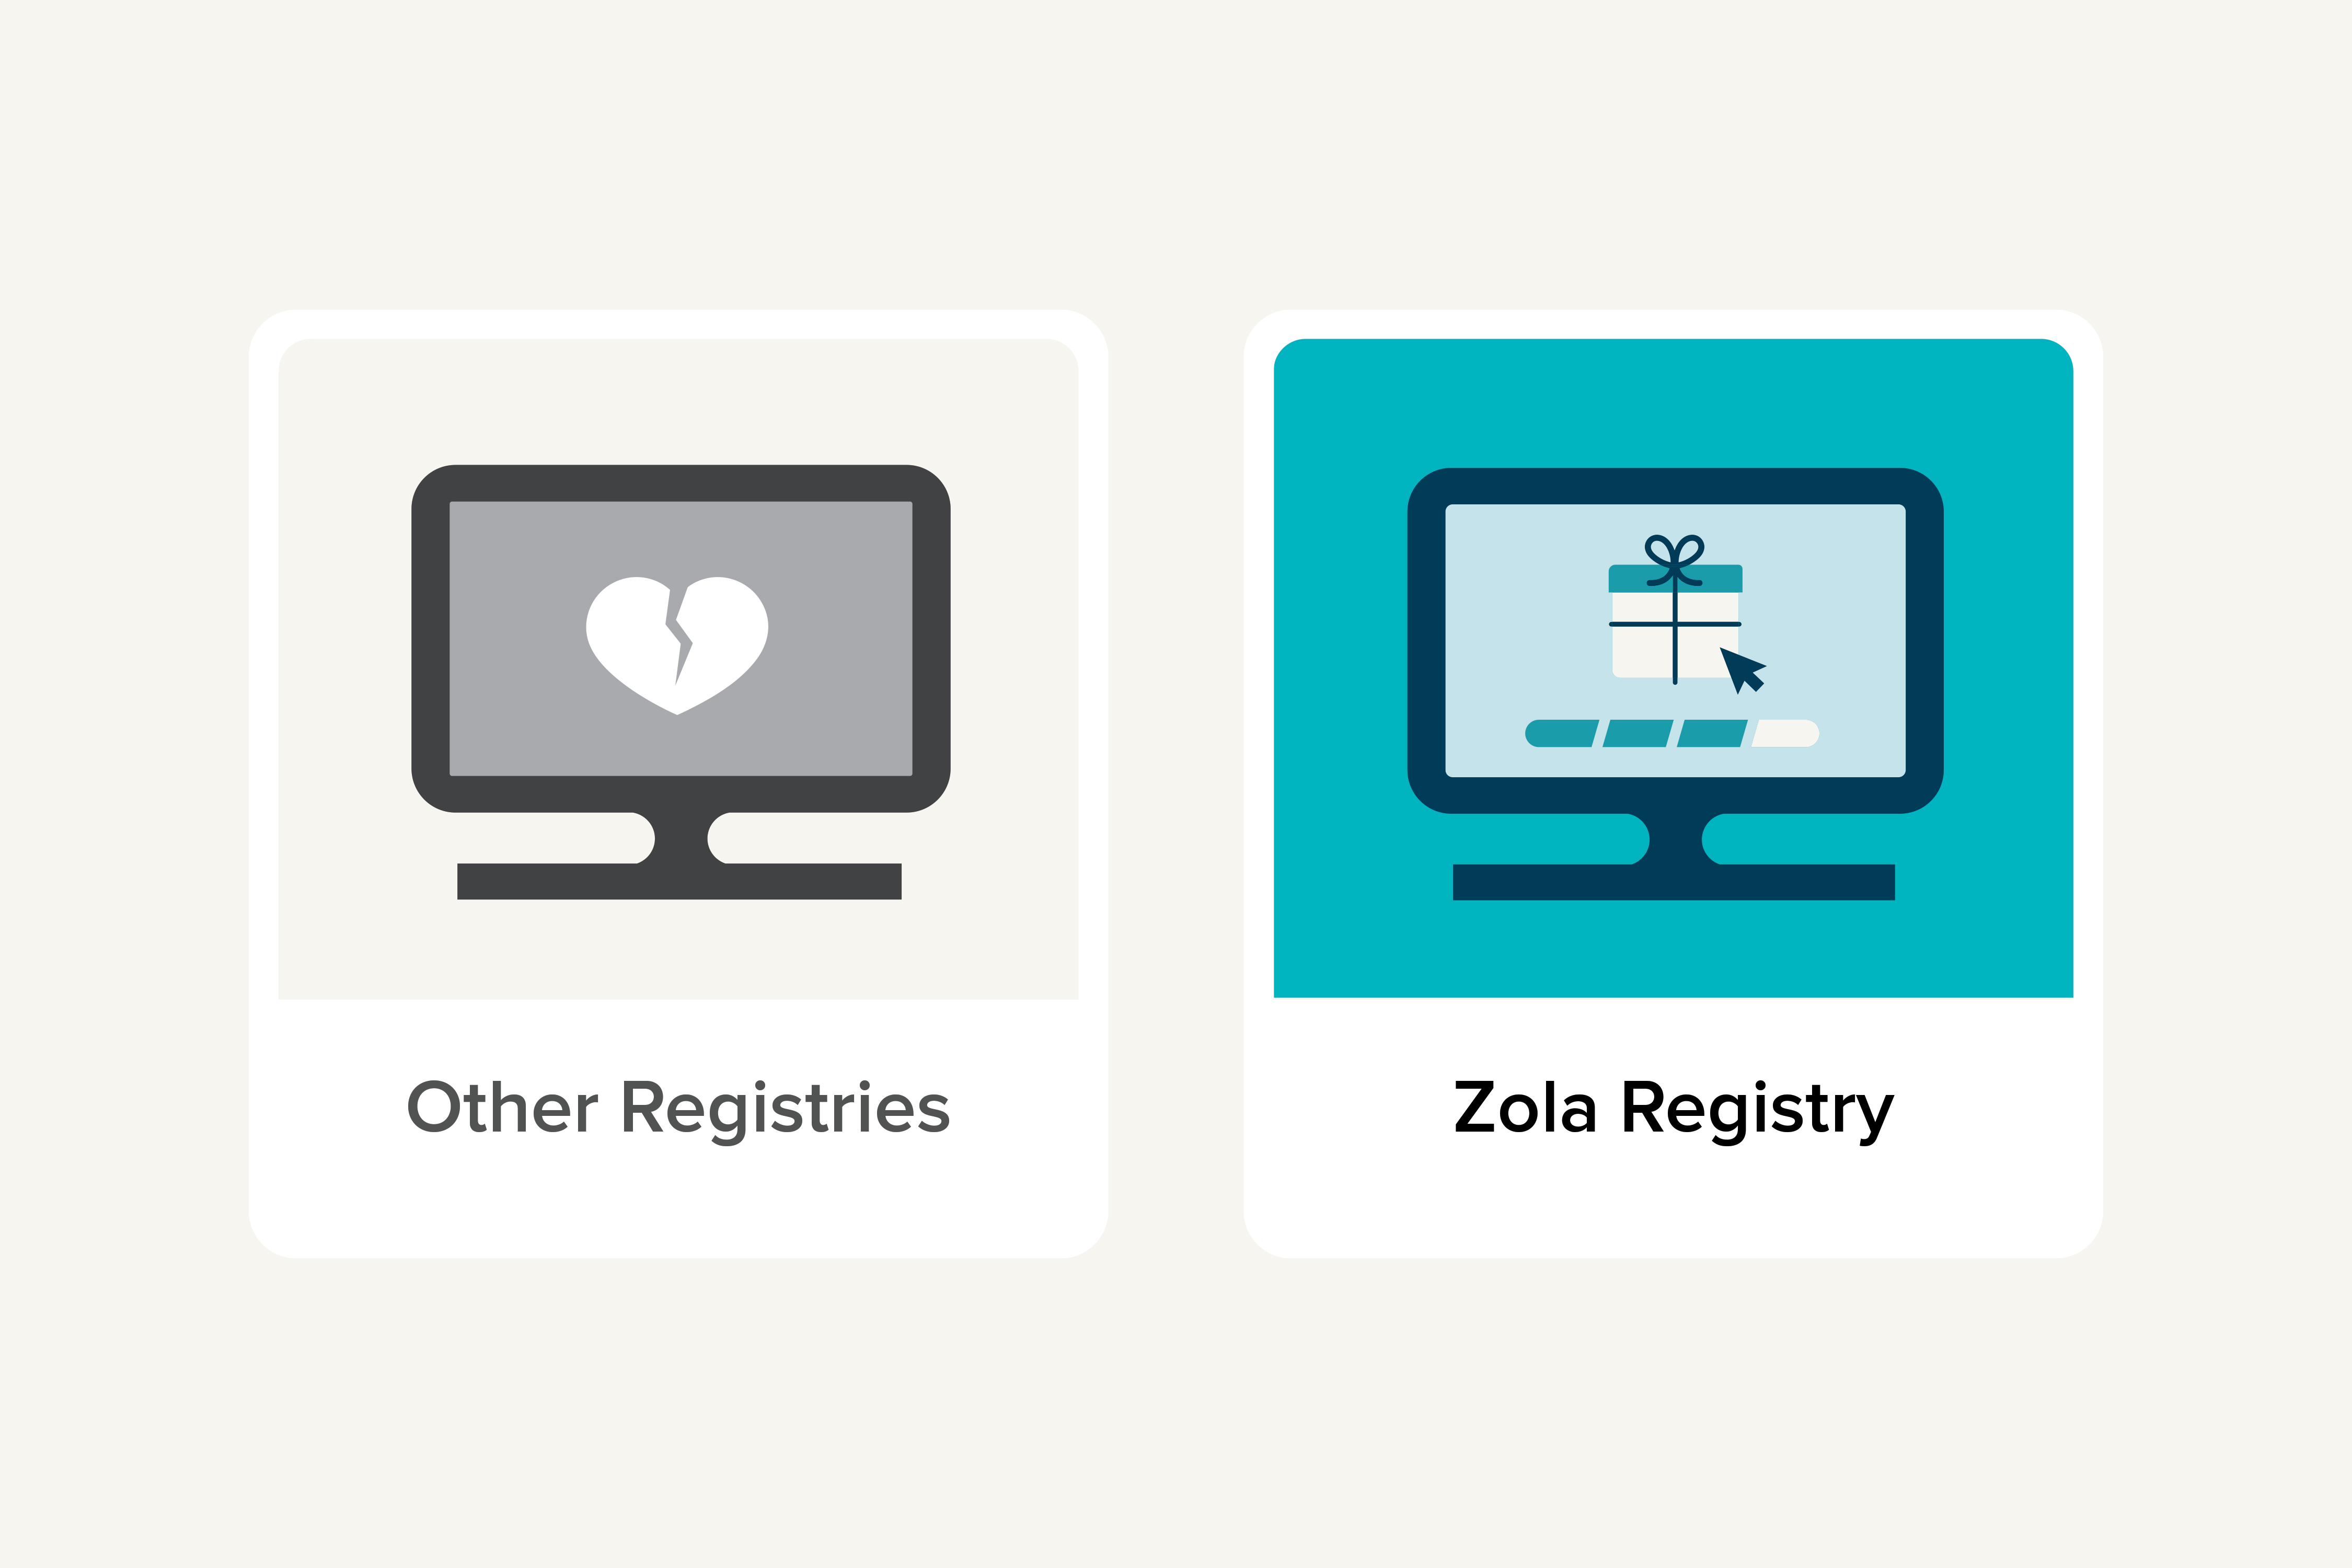 Zola registry versus other registries